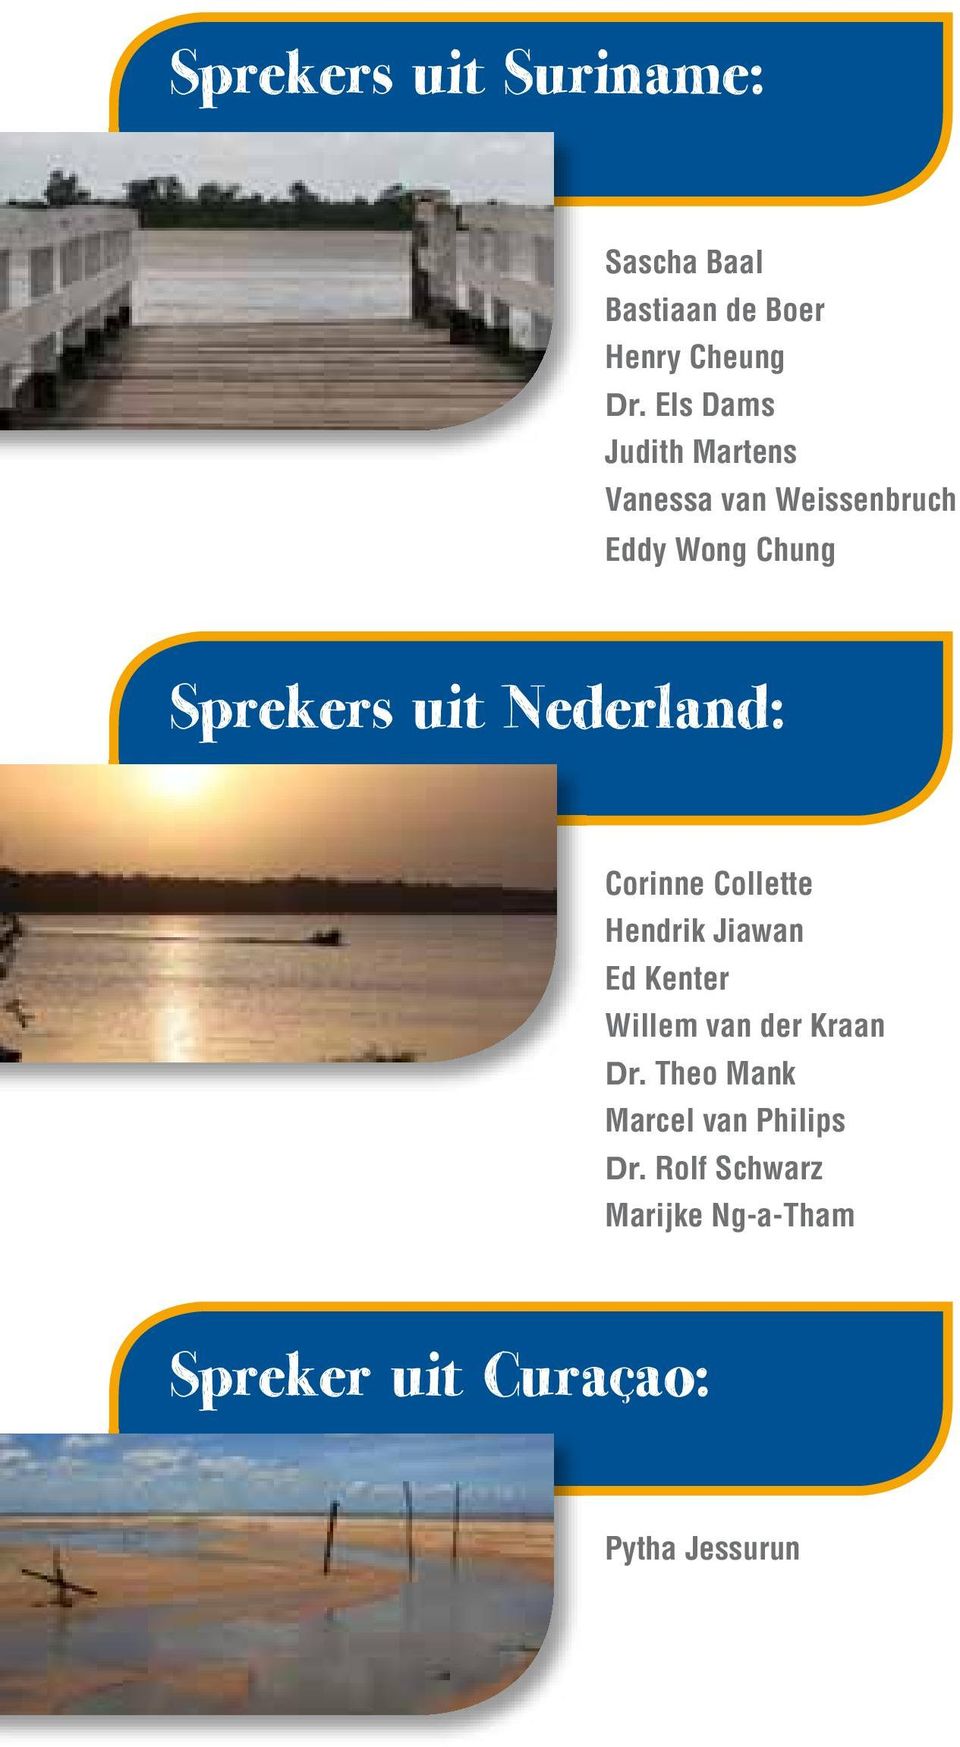 Nederland: Corinne Collette Hendrik Jiawan Ed Kenter Willem van der Kraan Dr.